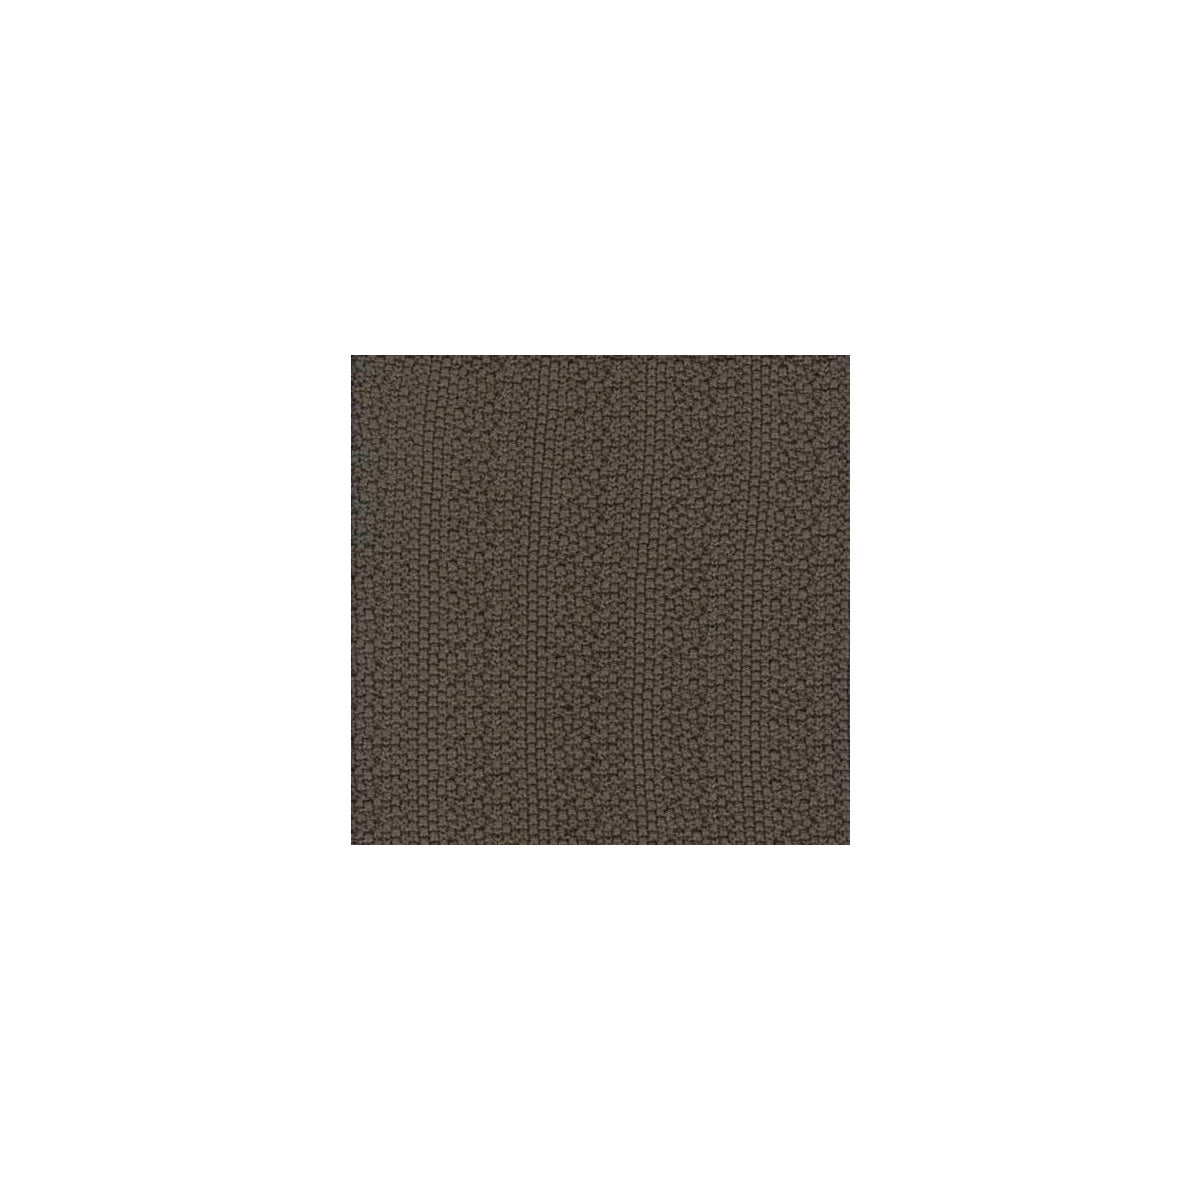 Pebble Knit - Stone - SWATCH - 4"x 8"